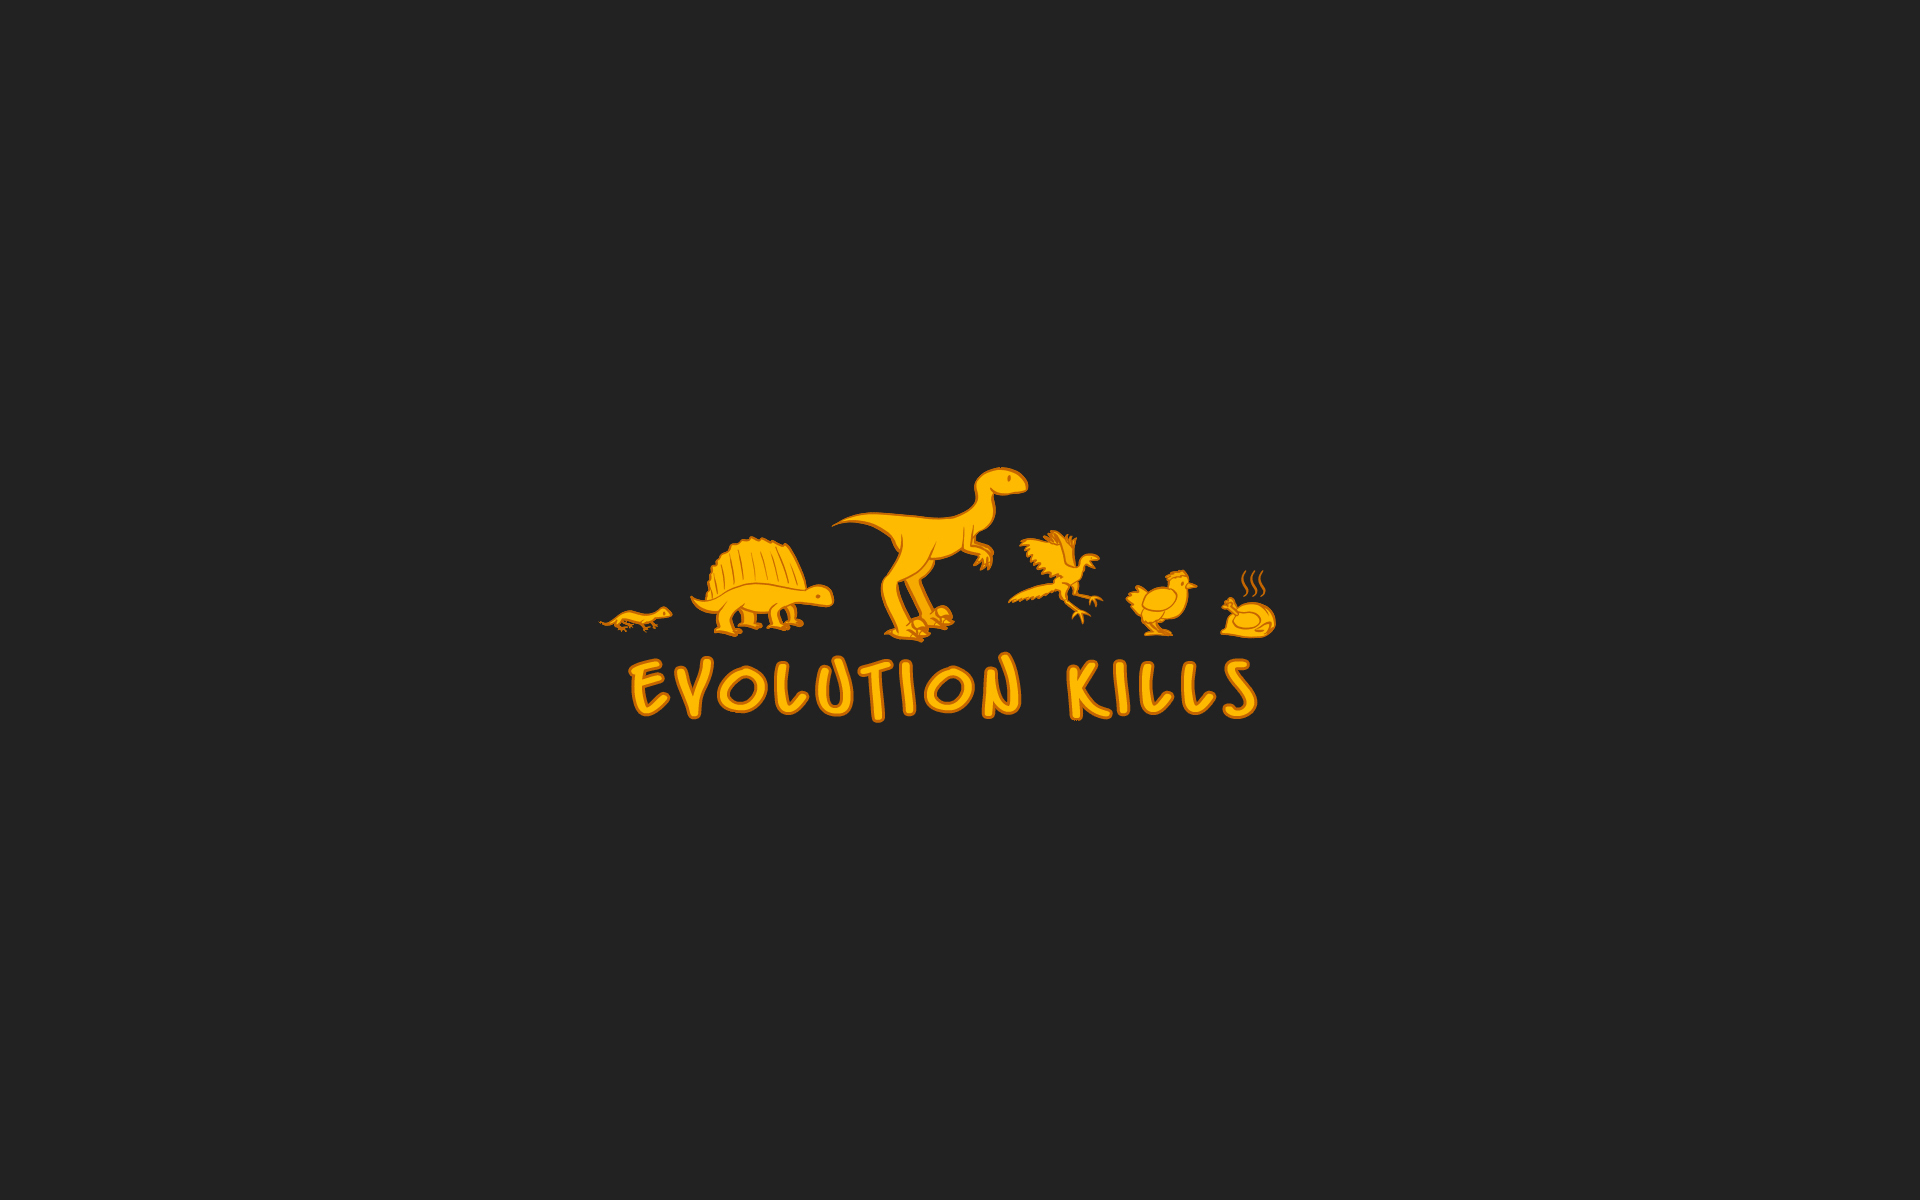 Evolution wallpaper